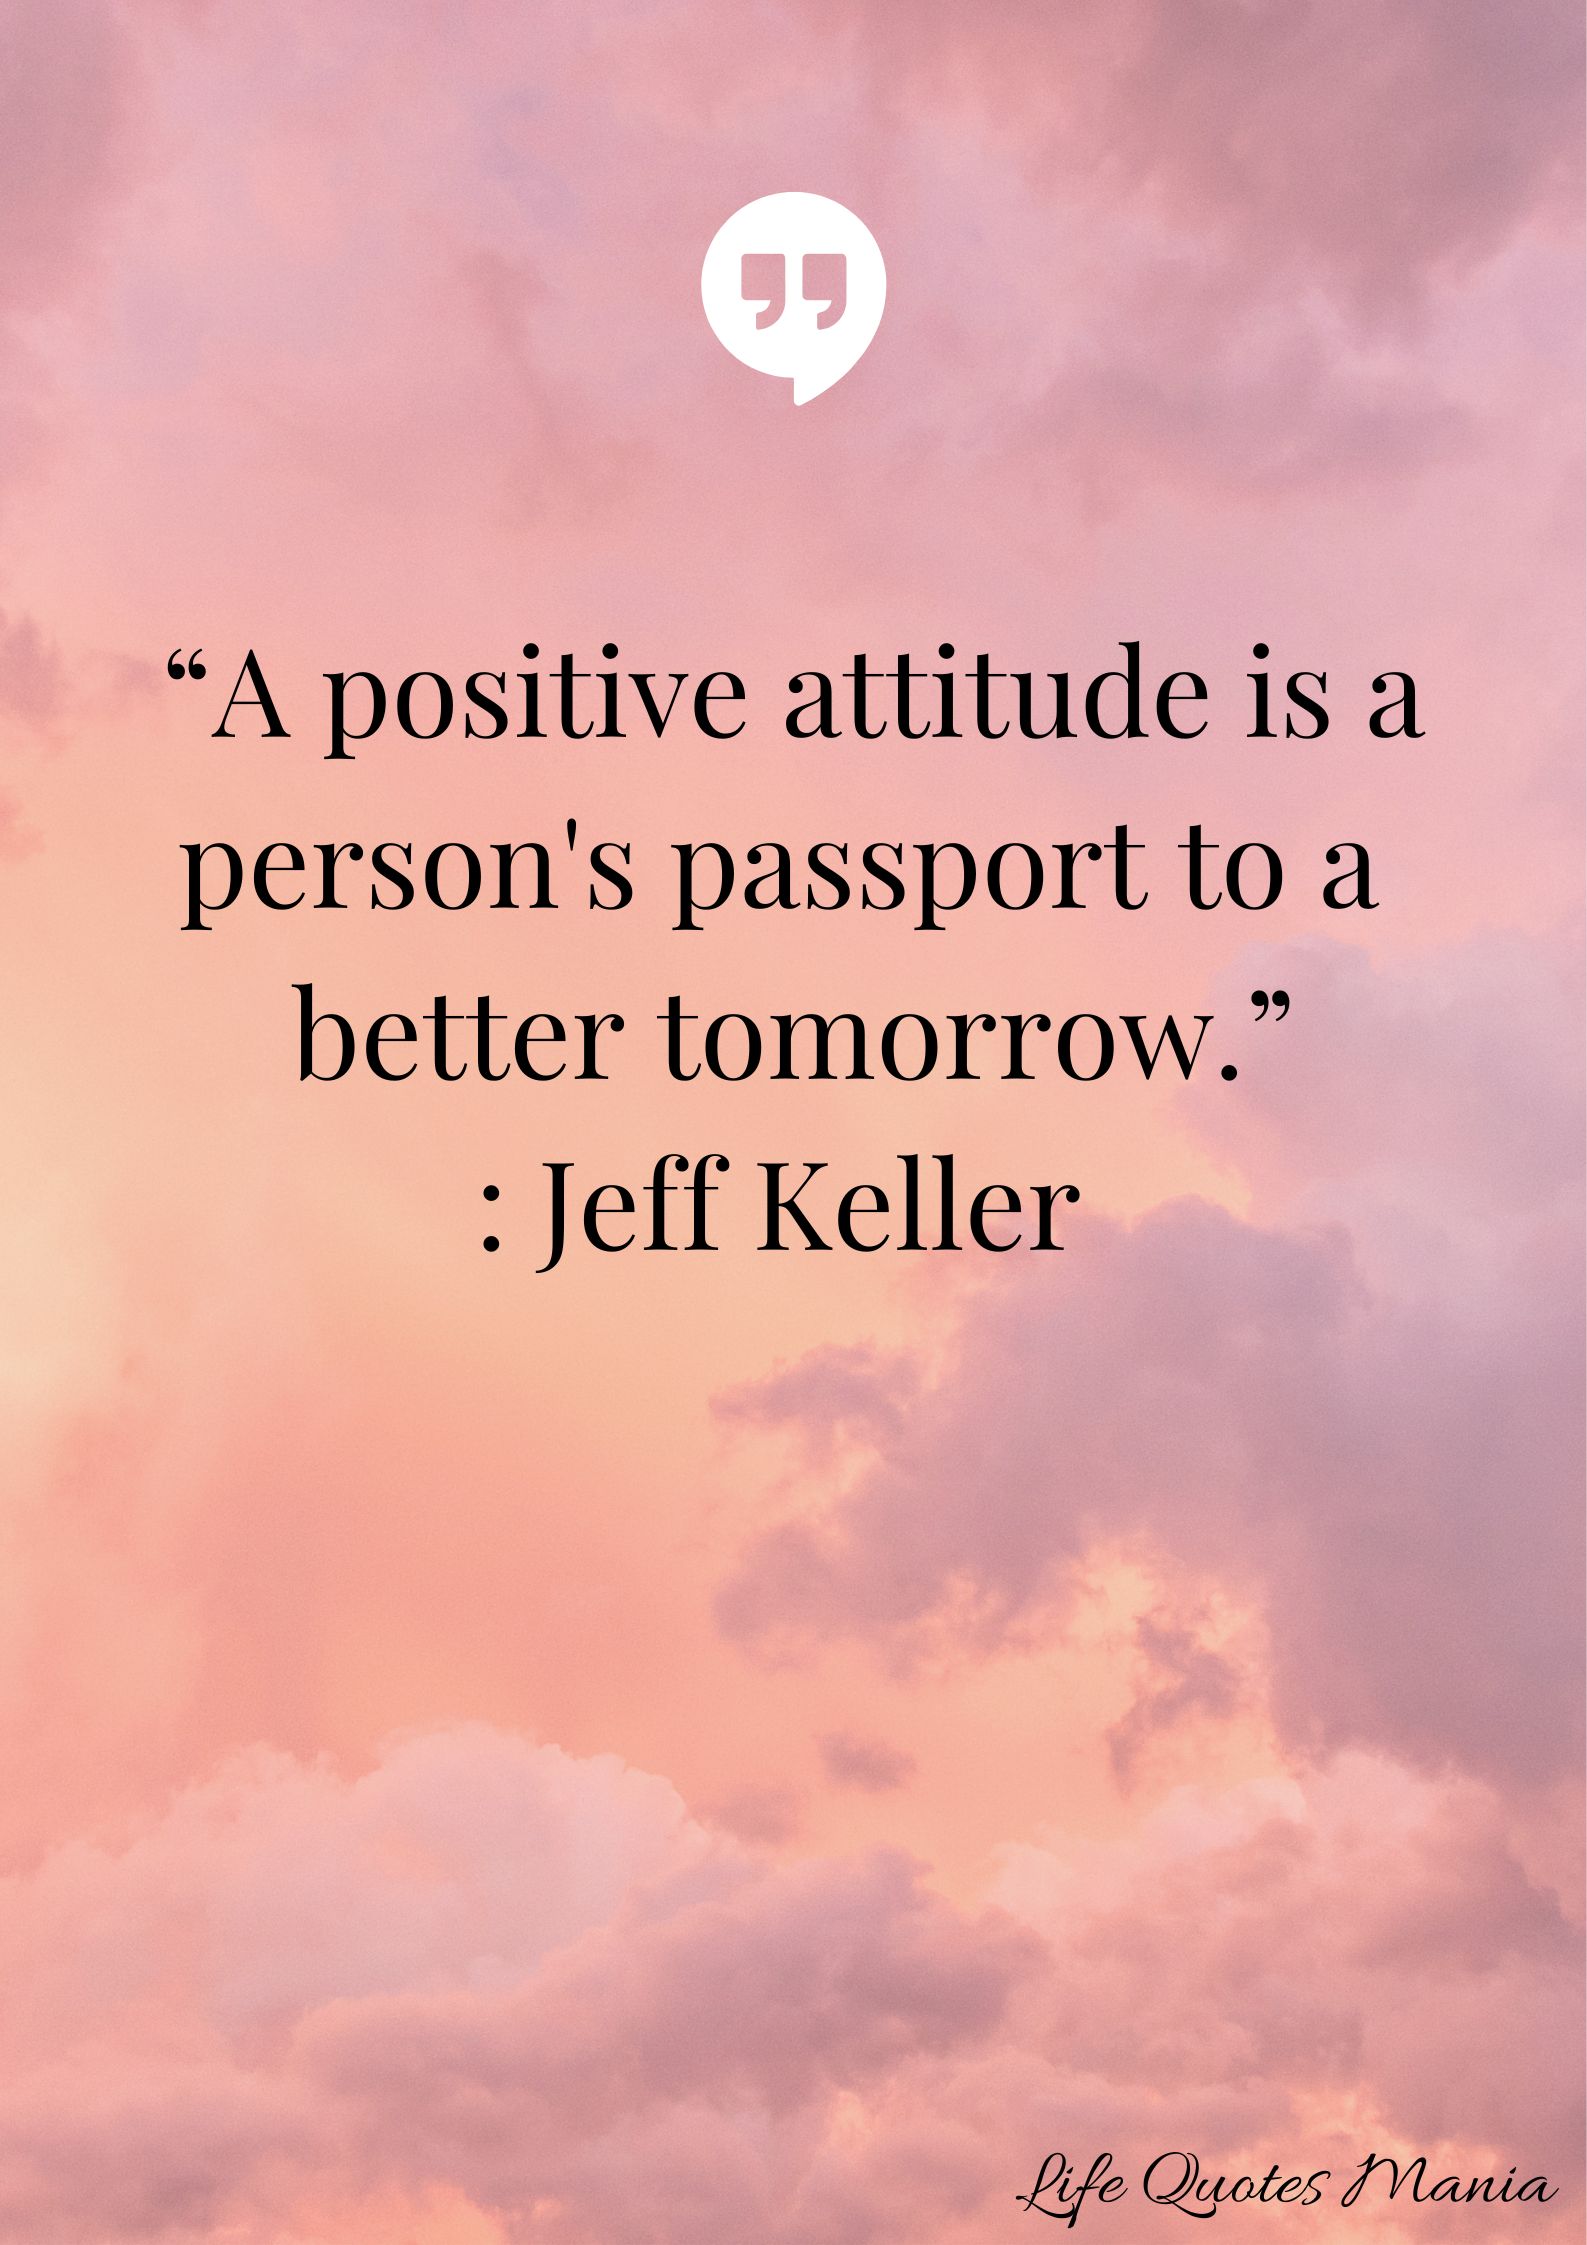 Attitude Quote - Jeff Keller